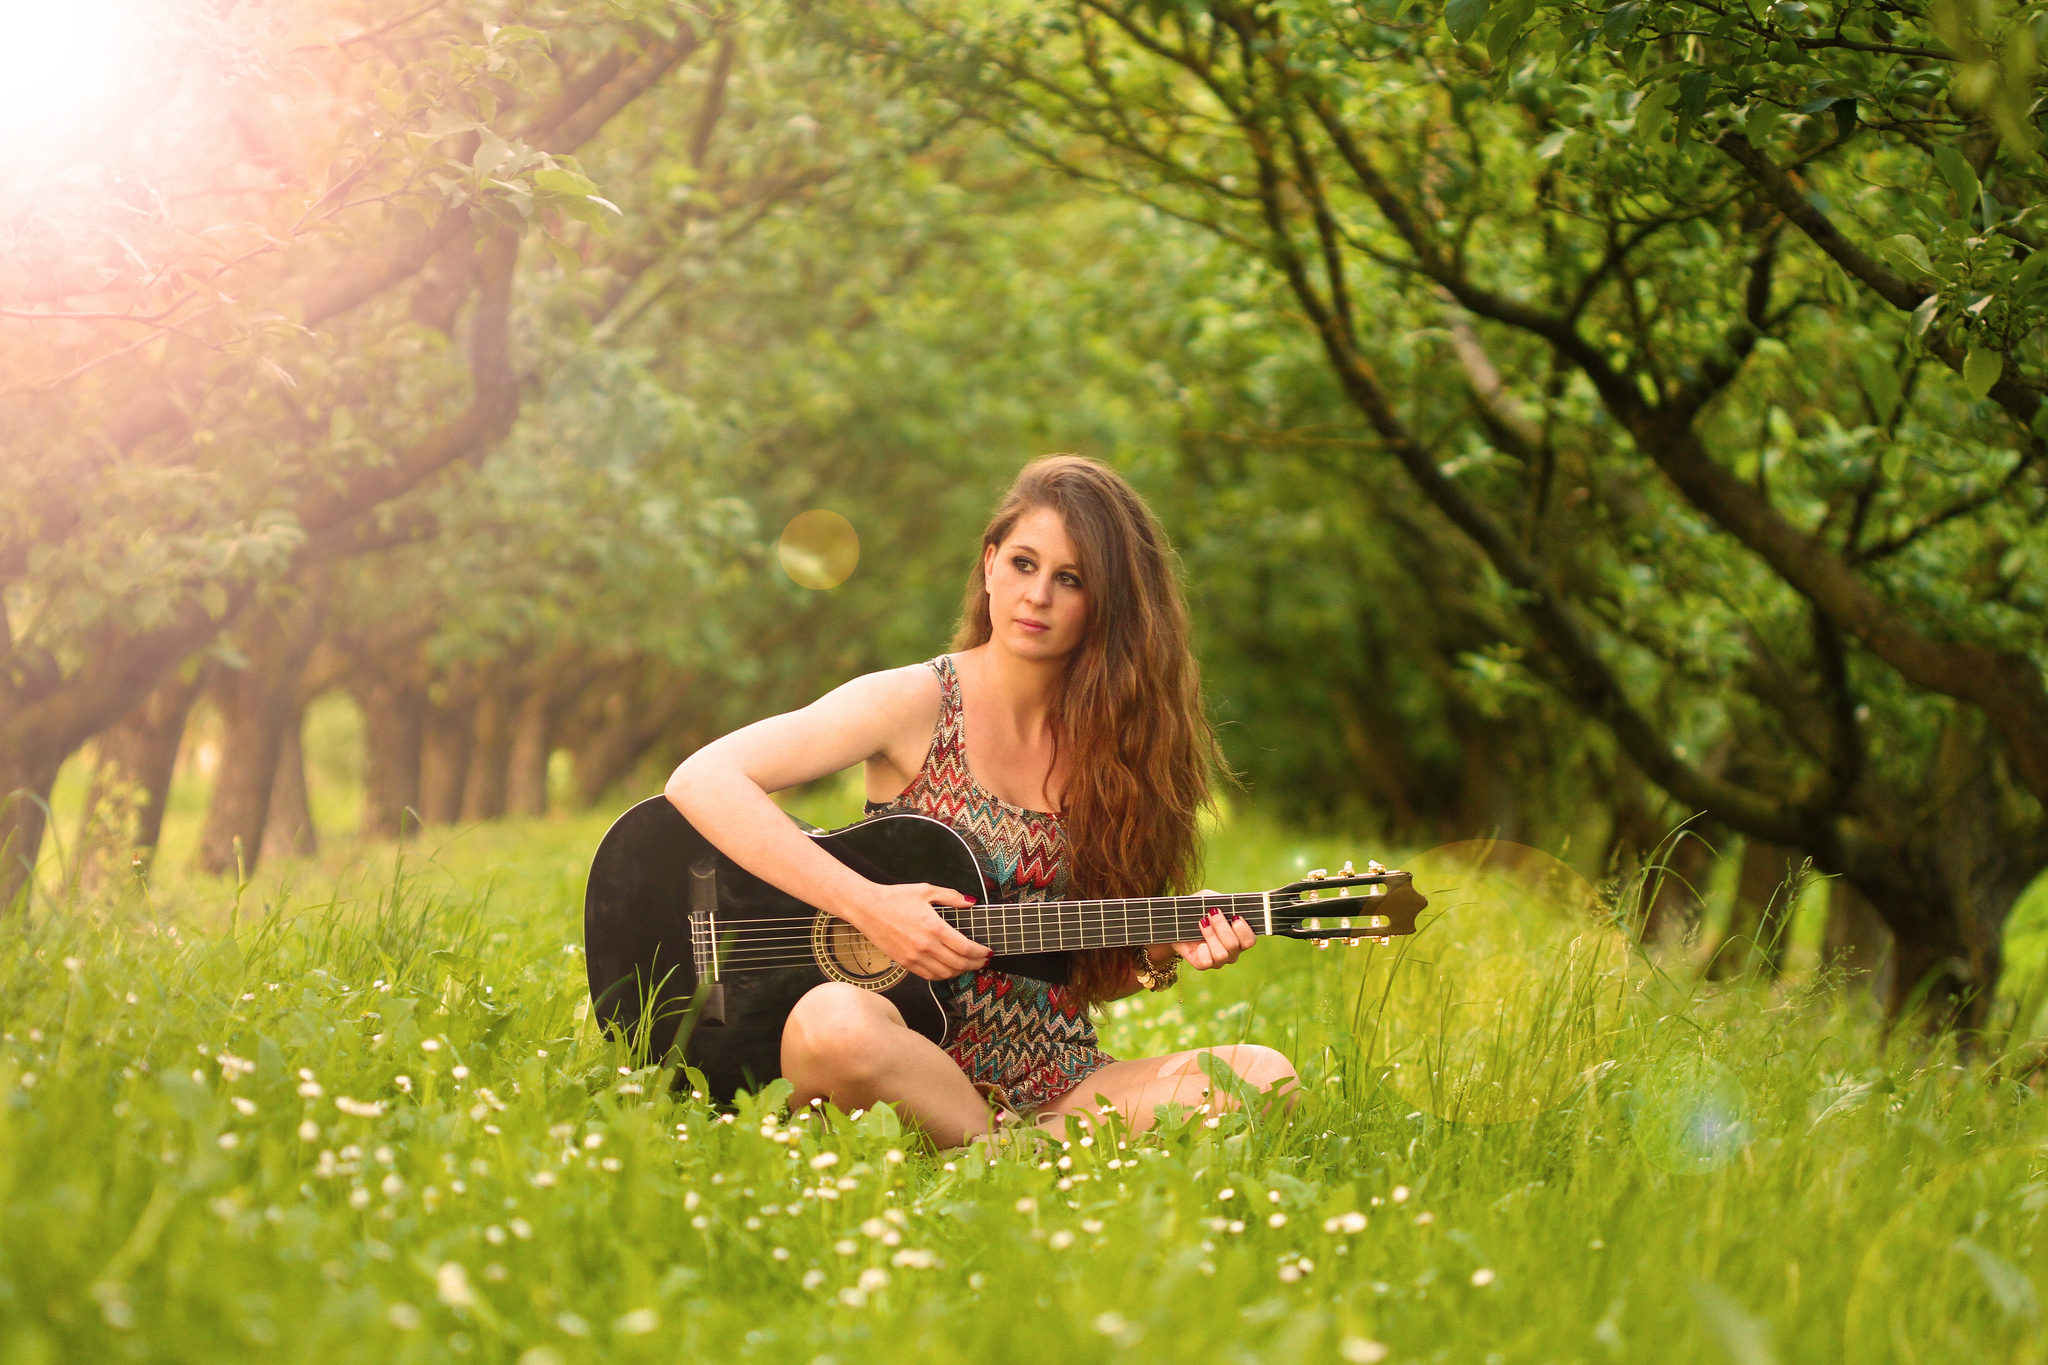 Исполнение песни лето. Девушка с гитарой на природе. Фотосессия с гитарой на природе. Девушка с электрогитарой.